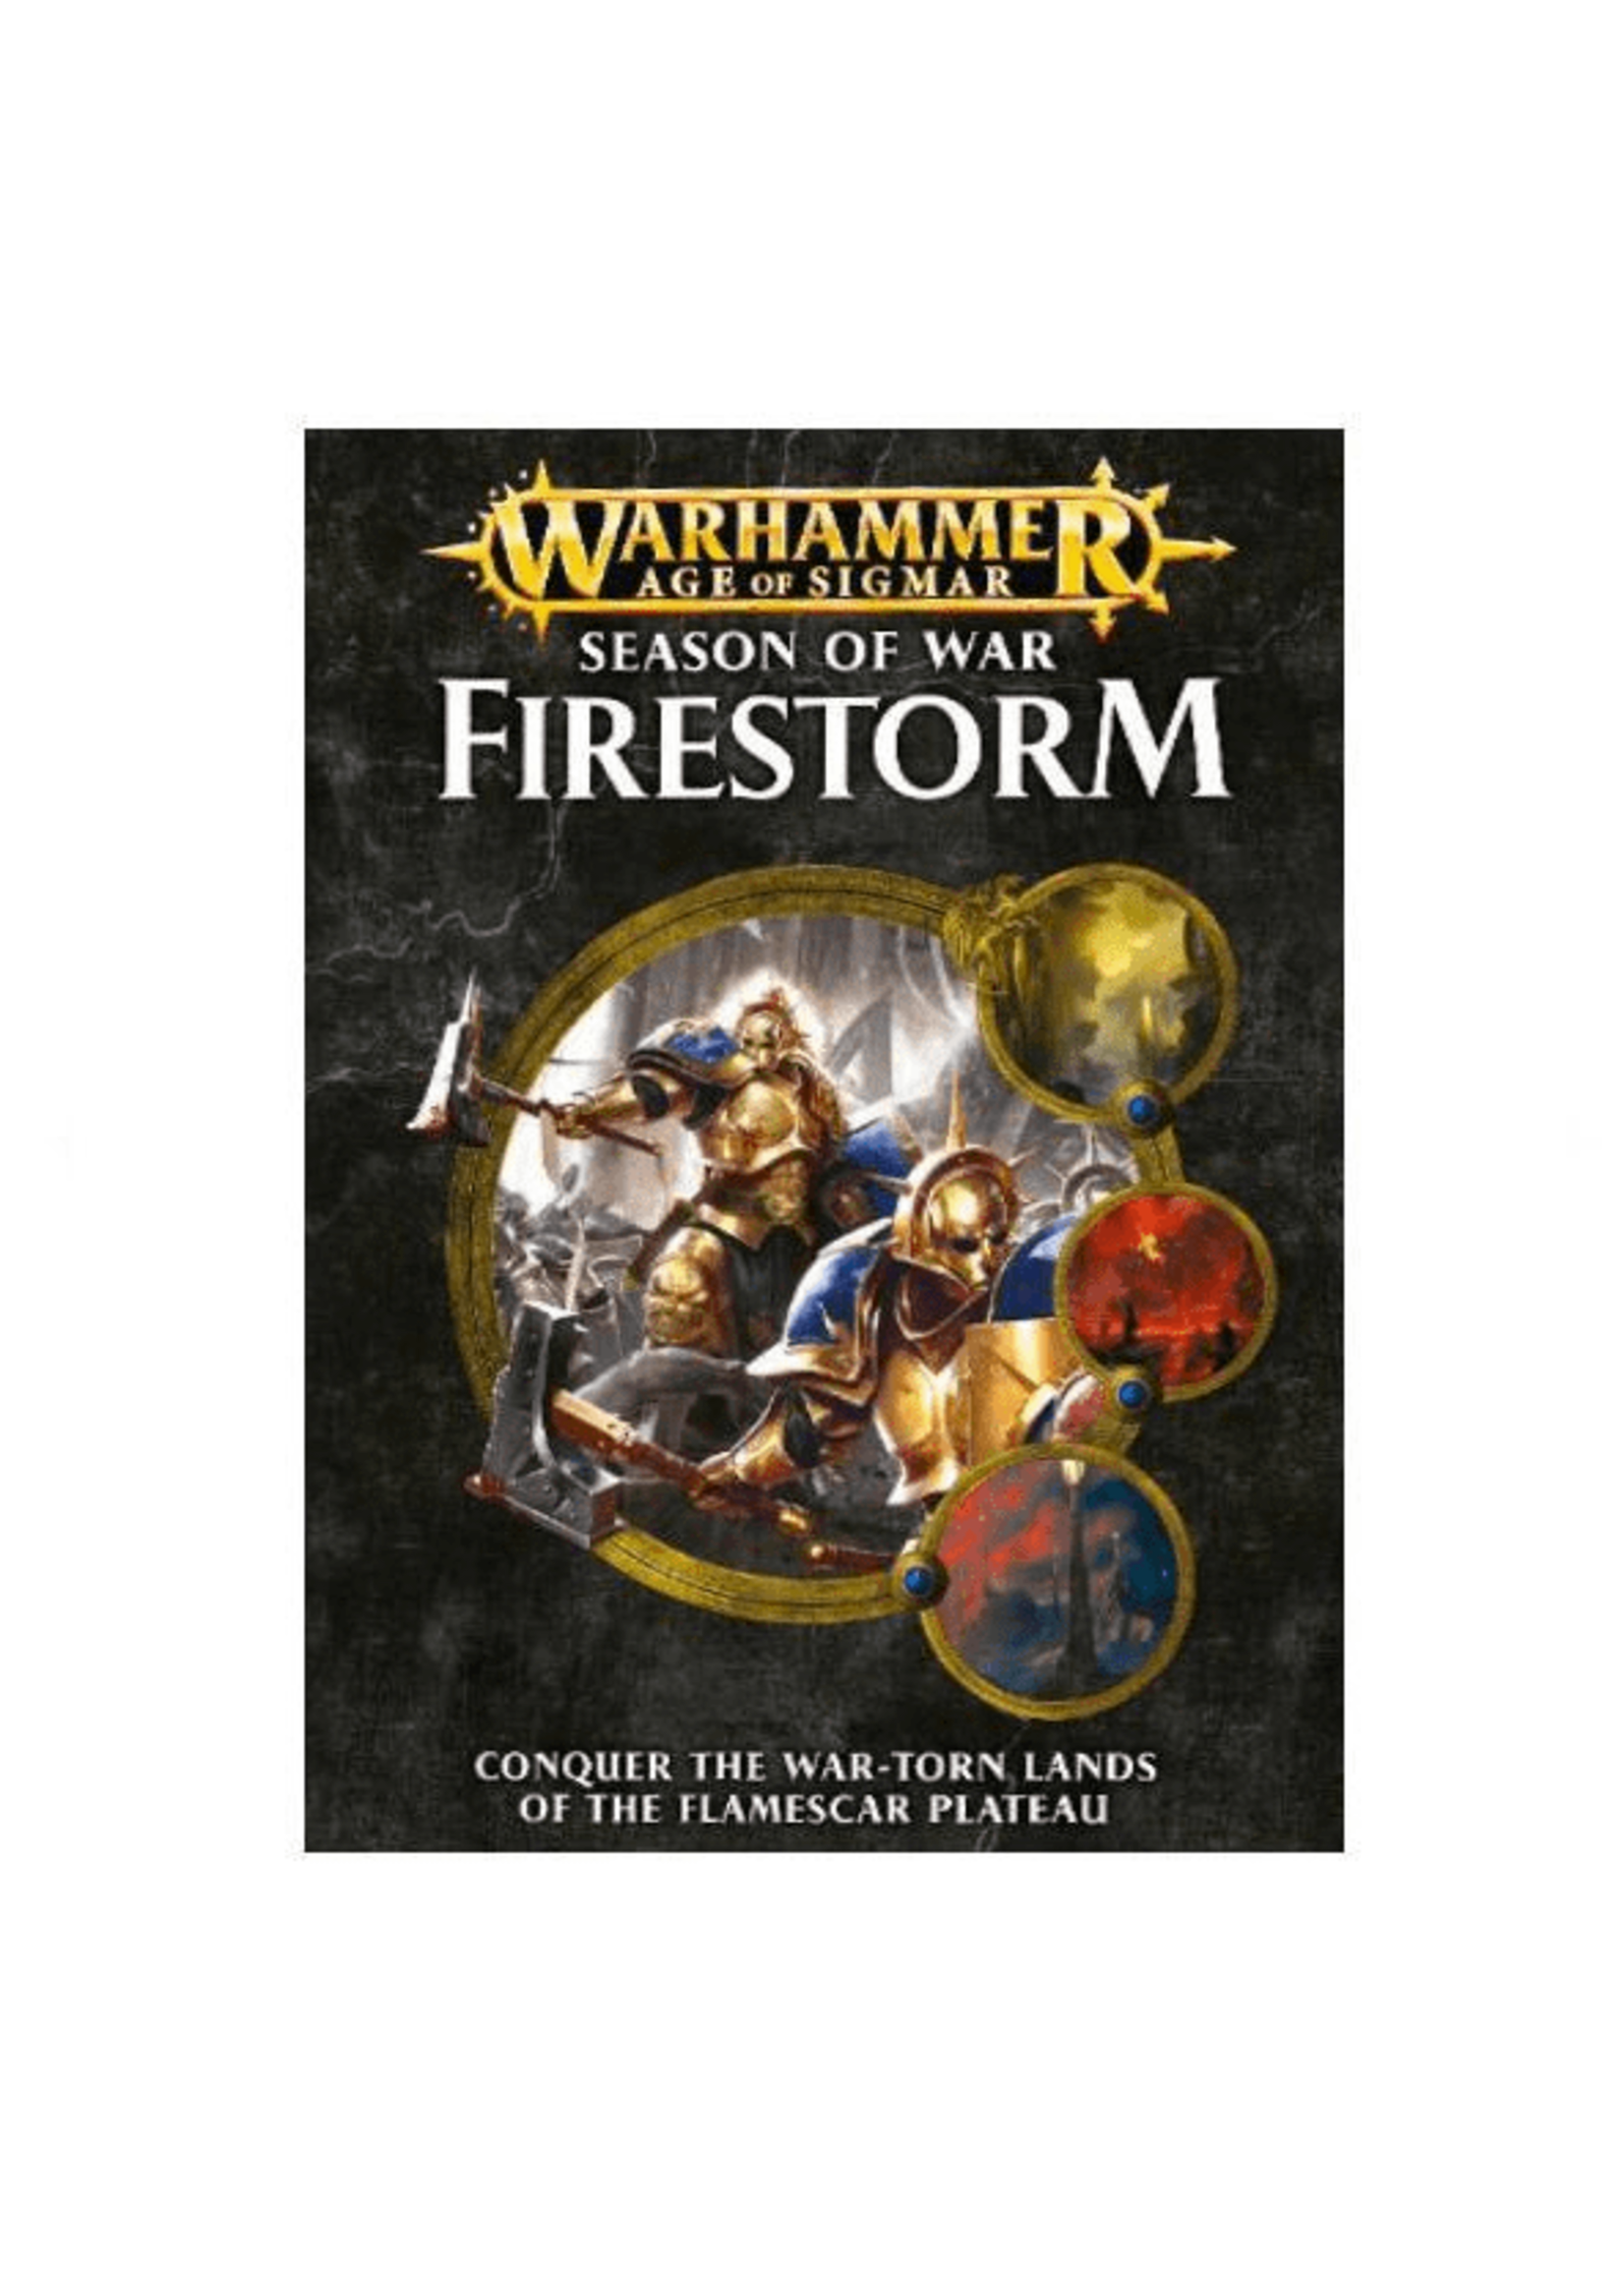 Warhammer Age of Sigmar: Season of War - Firestorm